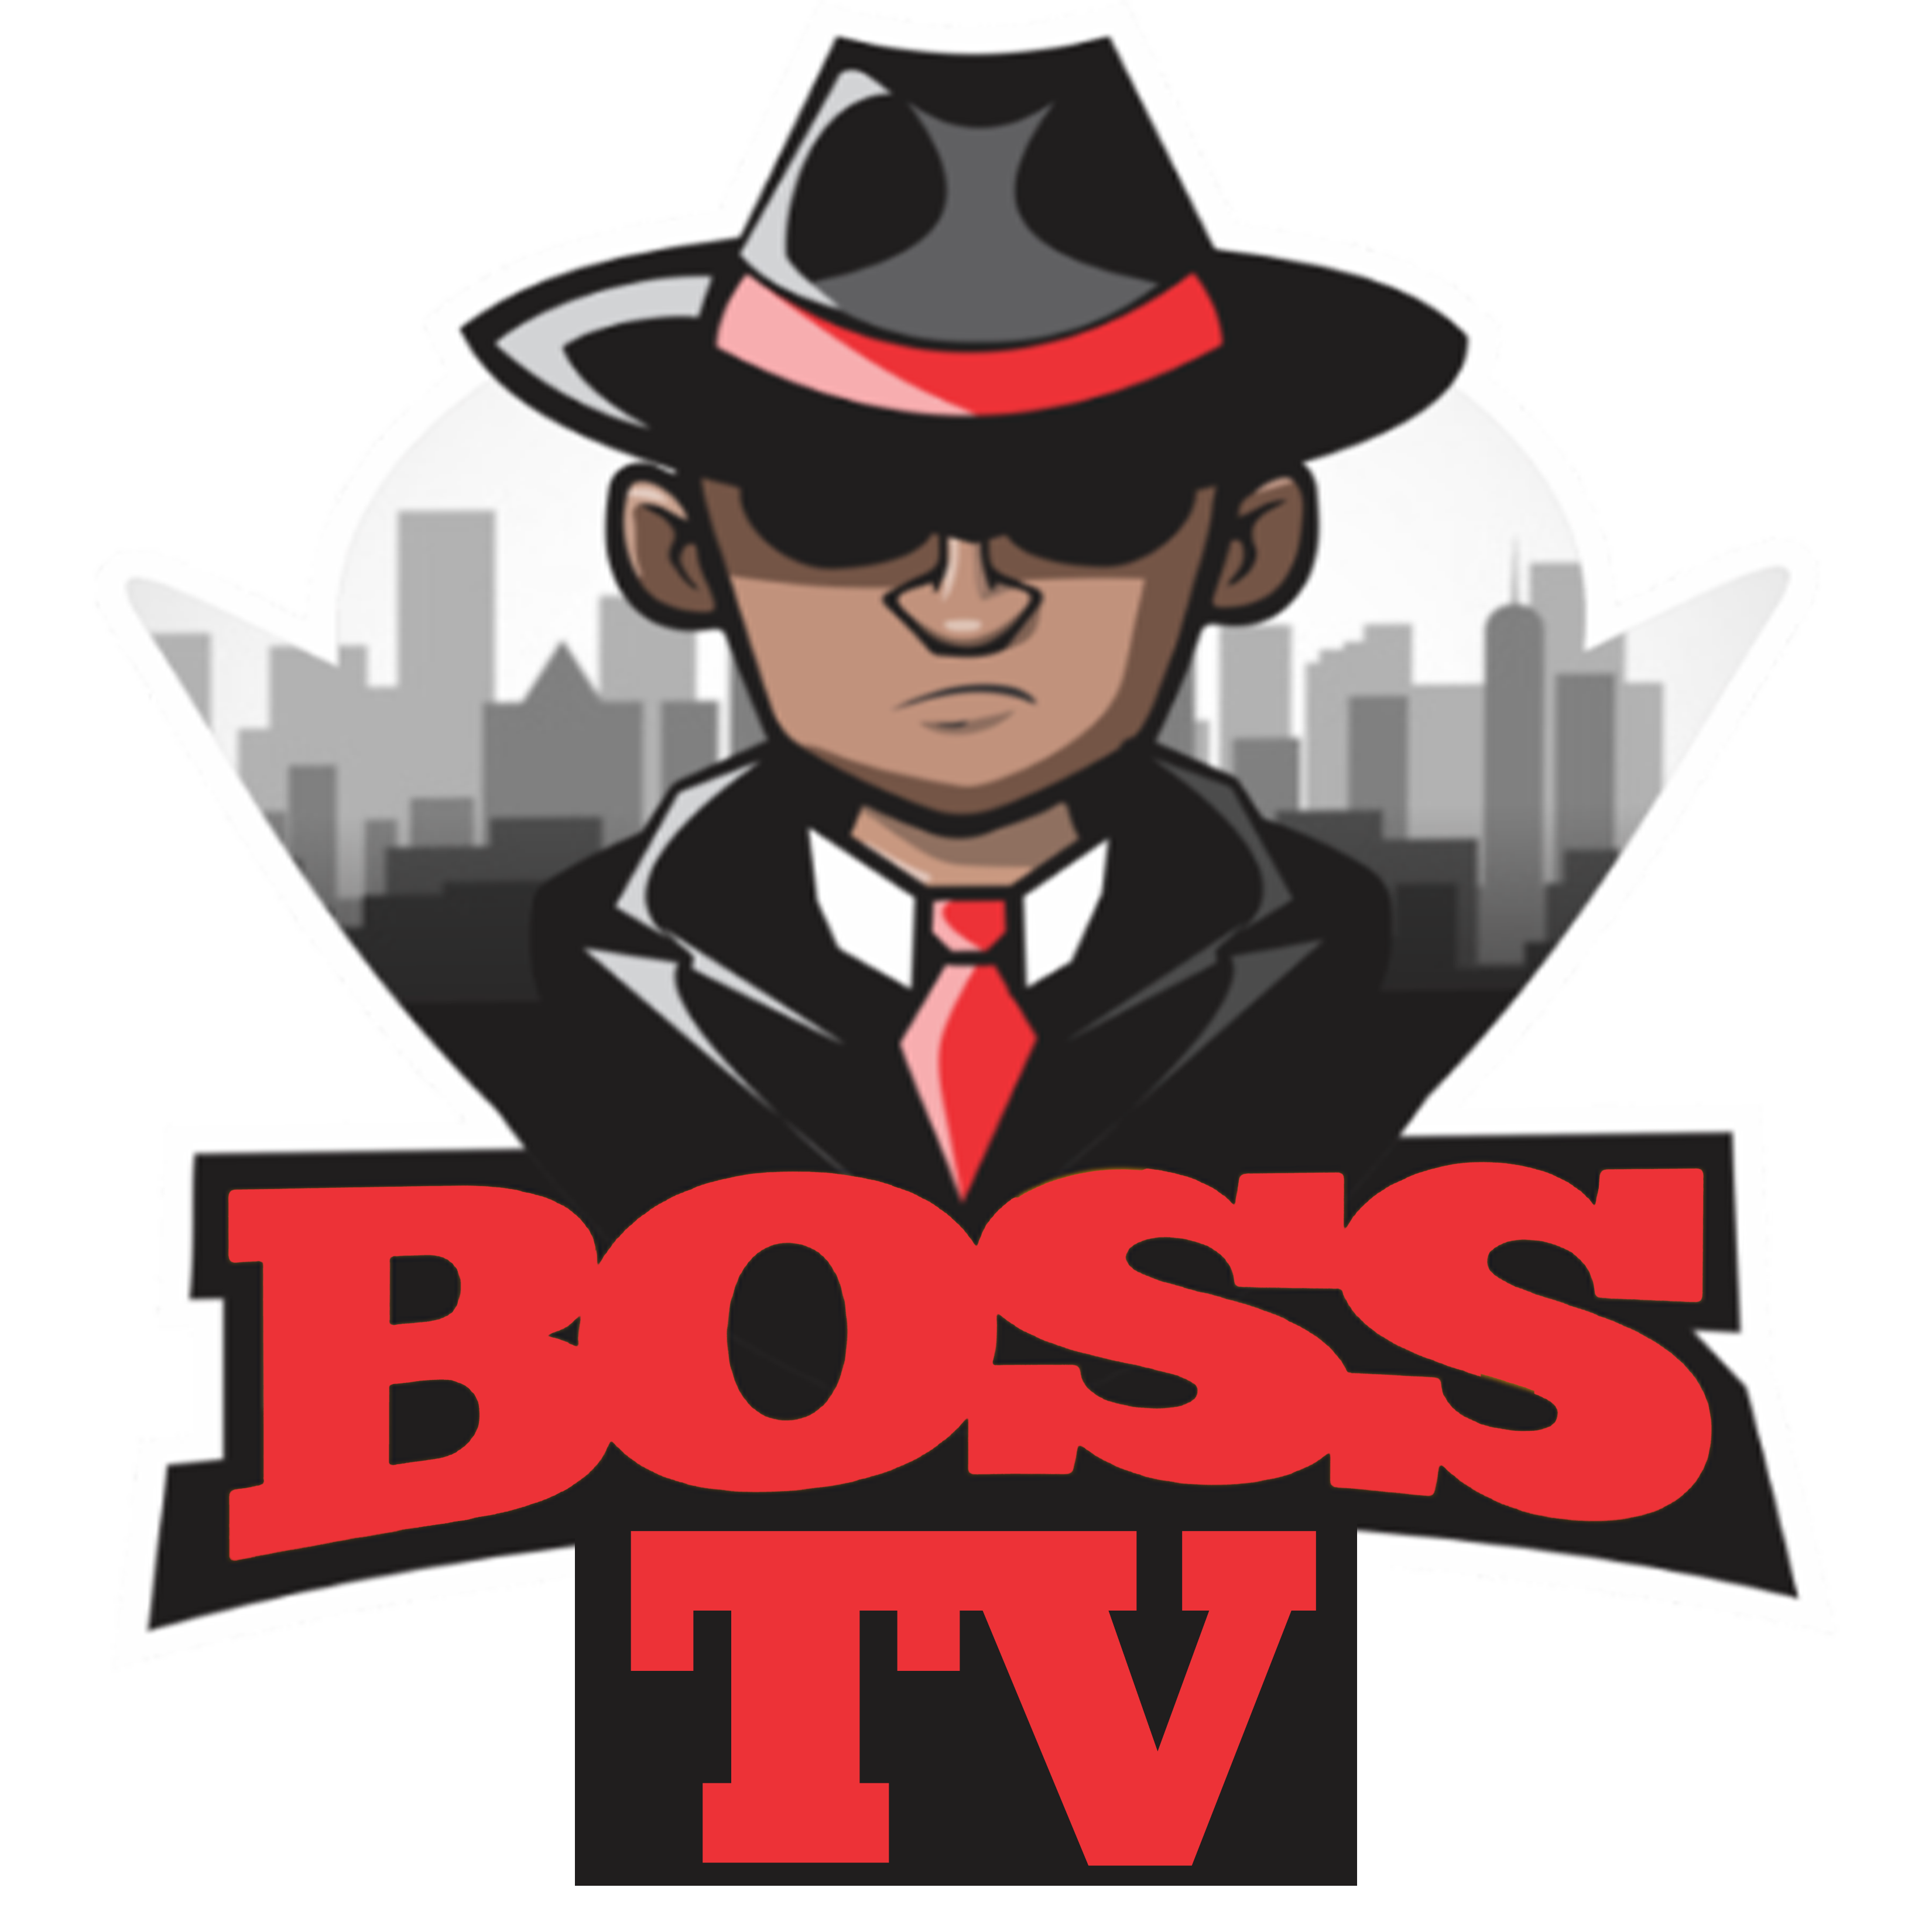 Boss TV